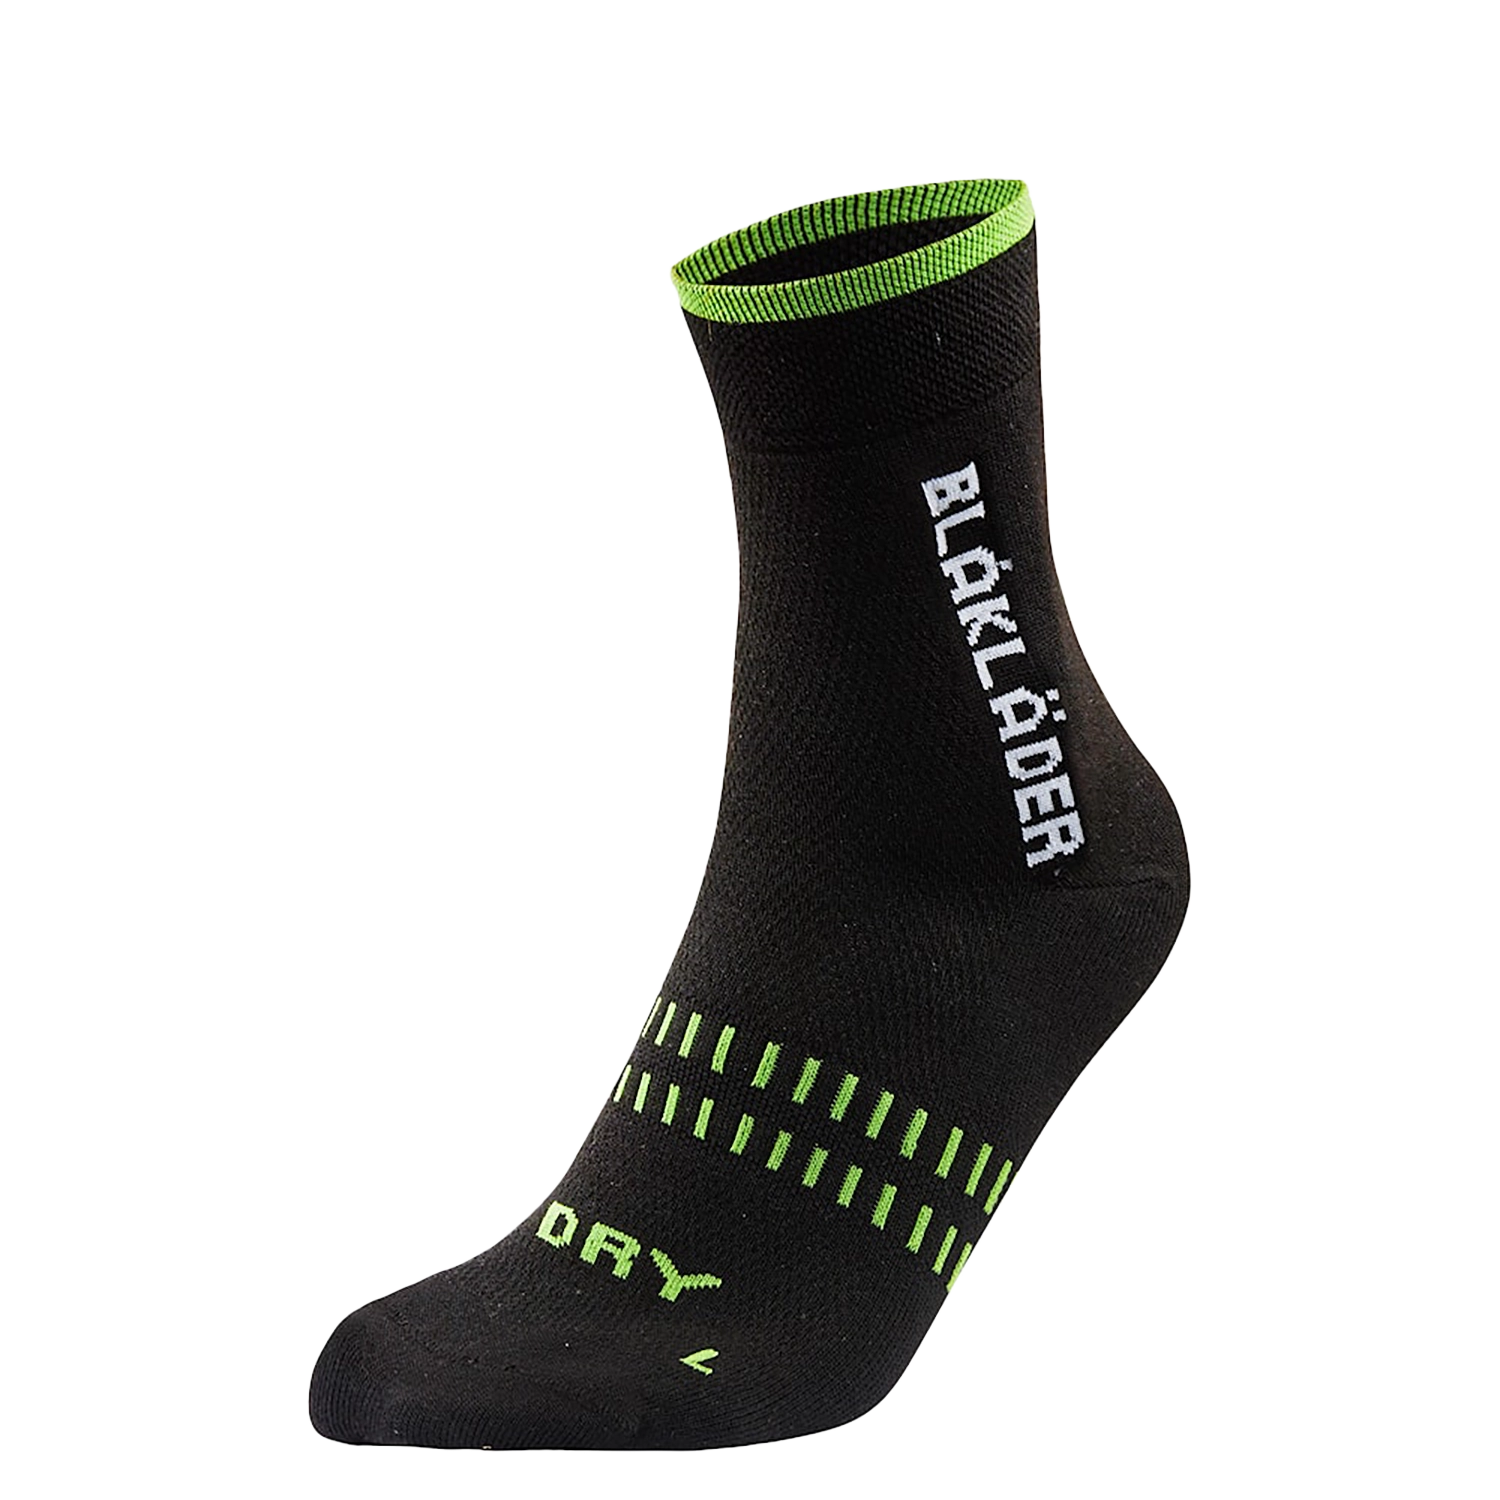 Dry sock 2-pack 2190/1093/9964 - black/neon green